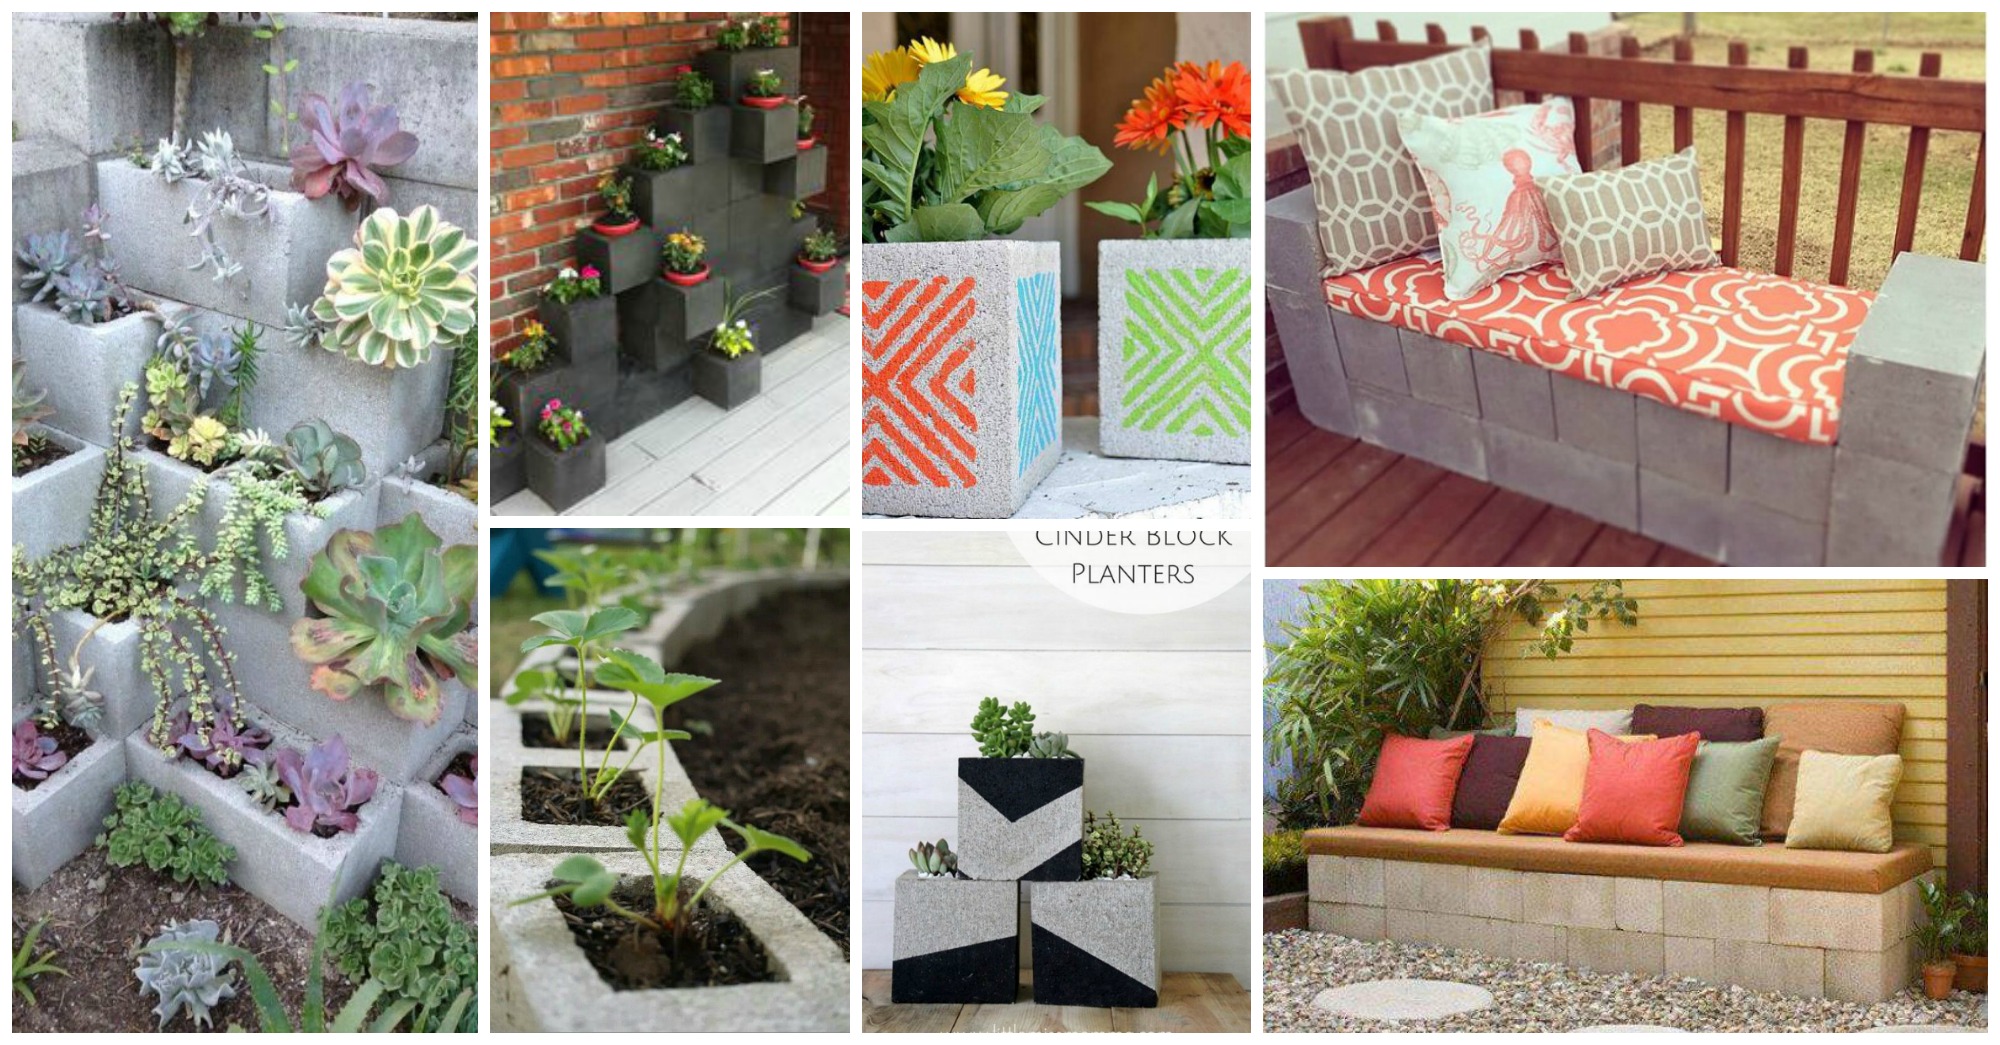 Easy Decorative Garden Projects Using Cinder Blocks